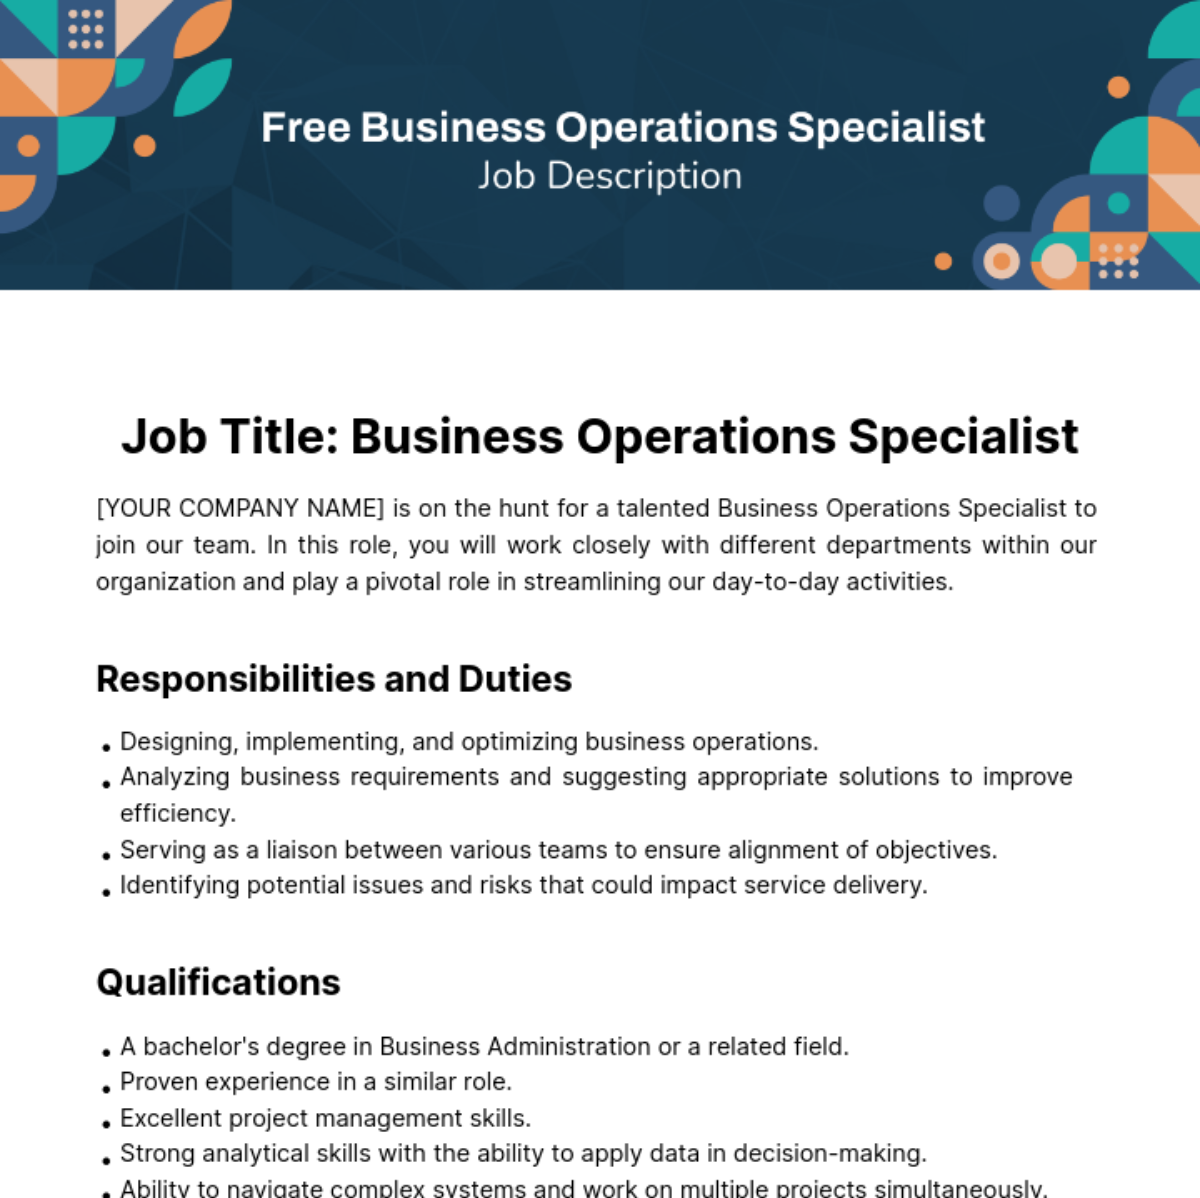 Free Business Operations Specialist Job Description Template